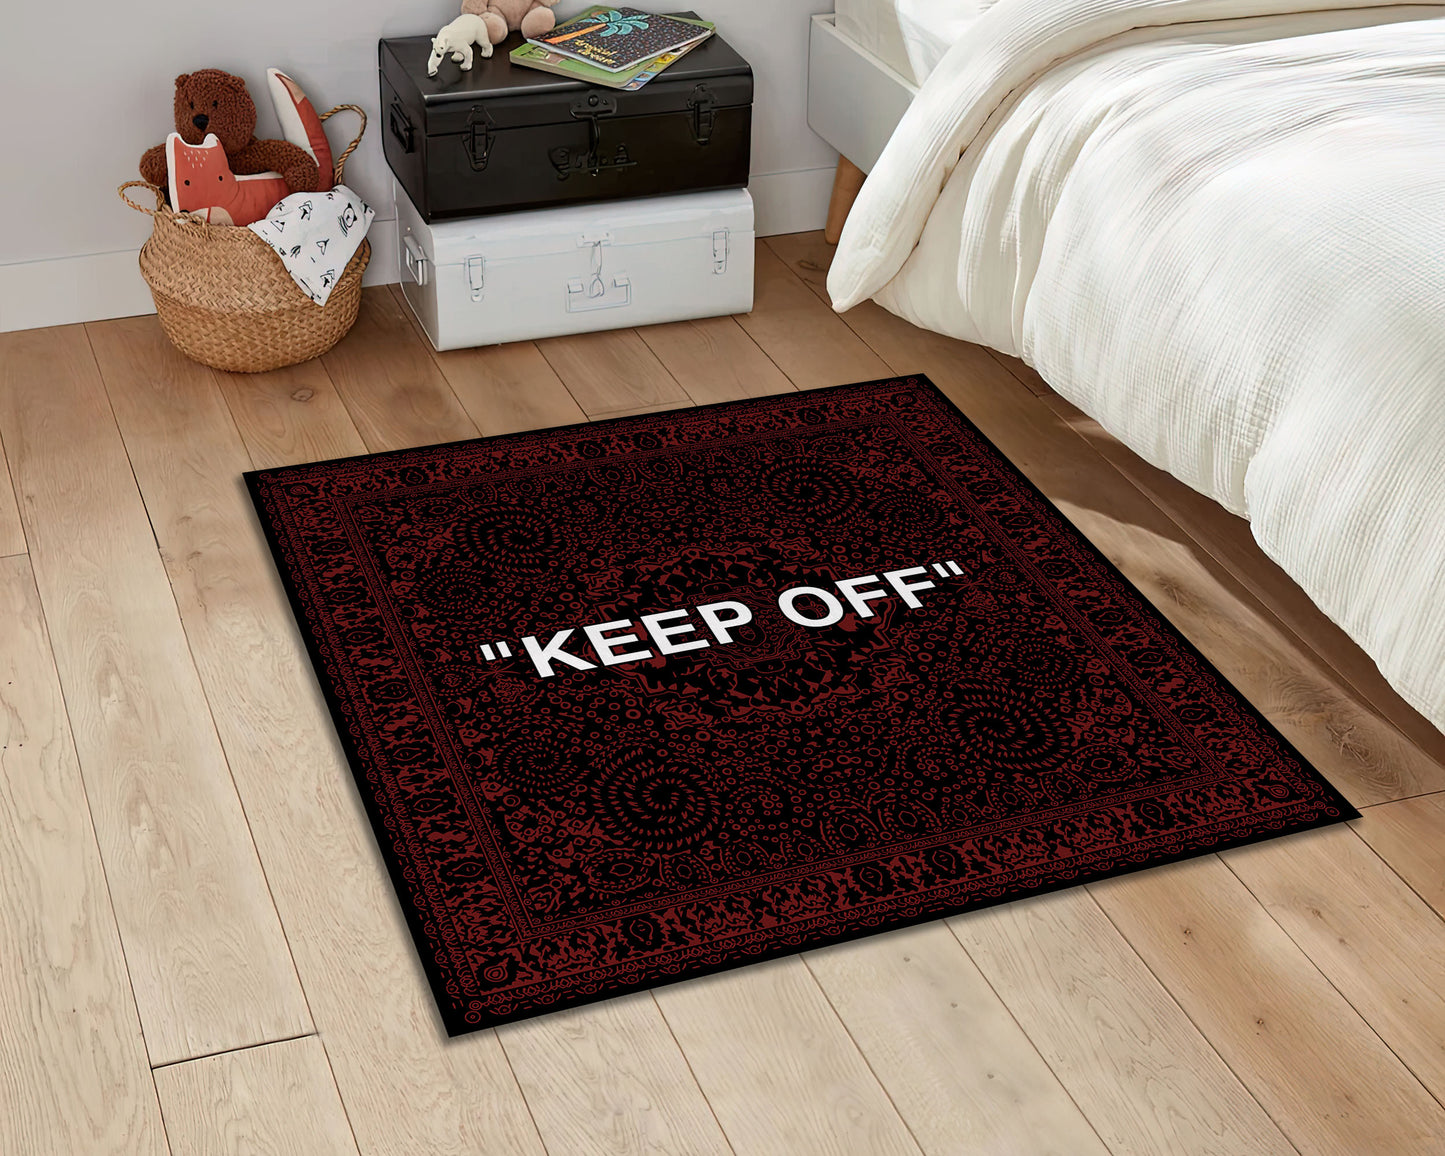 Red Keep Off Rug, Sneaker Room Mat, Popular IKEA Carpet, Hypebeast Decor, Keepoff Rug, Sneaker Mat